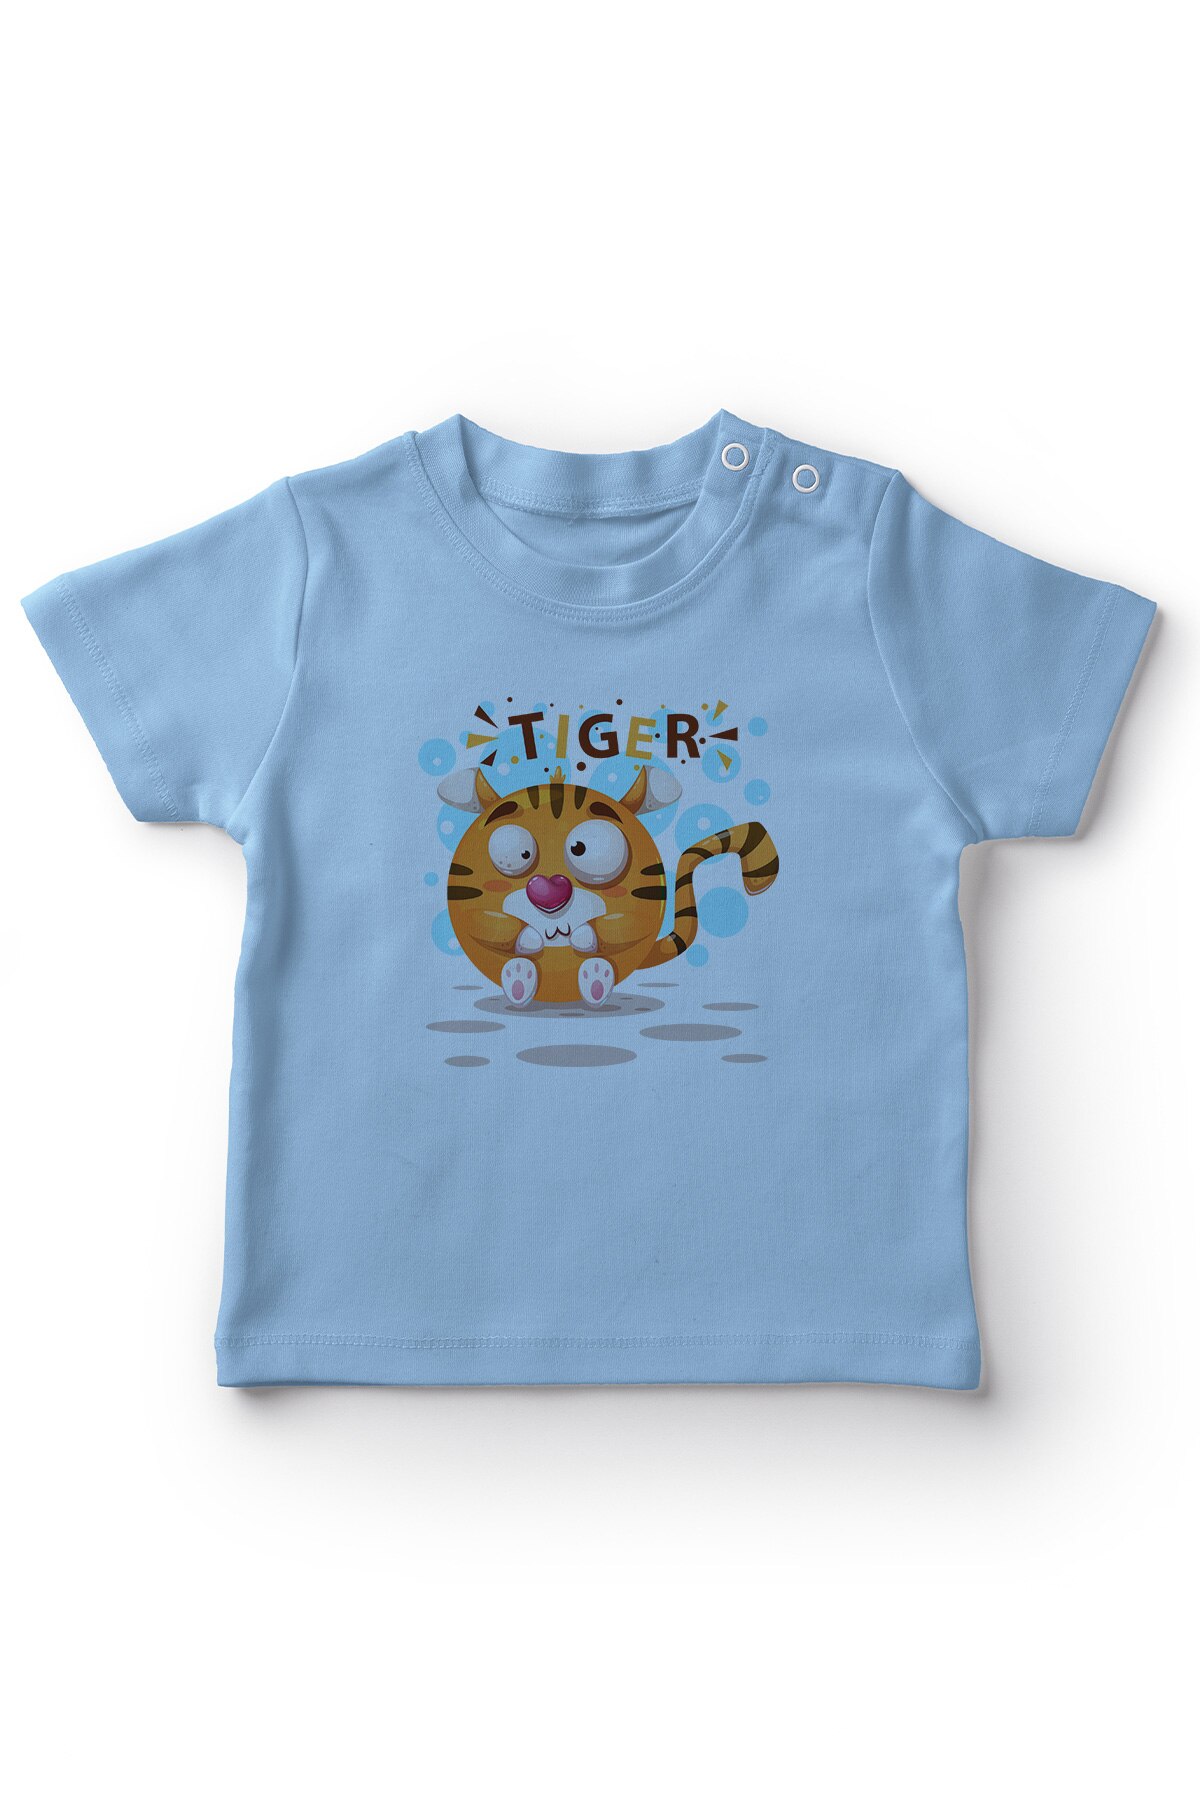 Angemiel Baby Zitten Tijger Baby Boy T-shirt Blauw